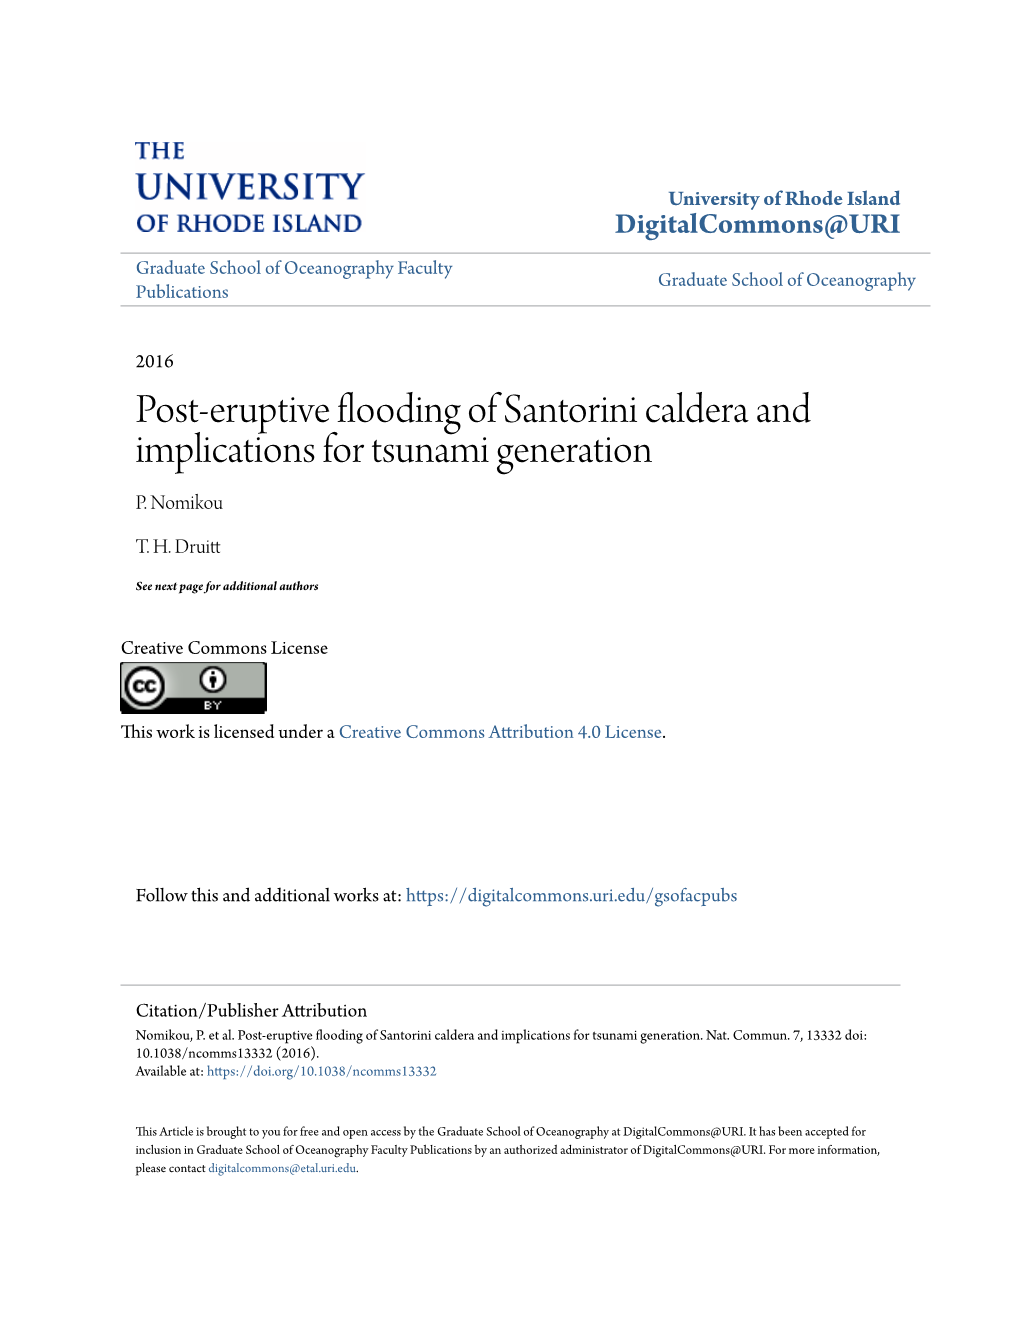 Post-Eruptive Flooding of Santorini Caldera and Implications for Tsunami Generation P